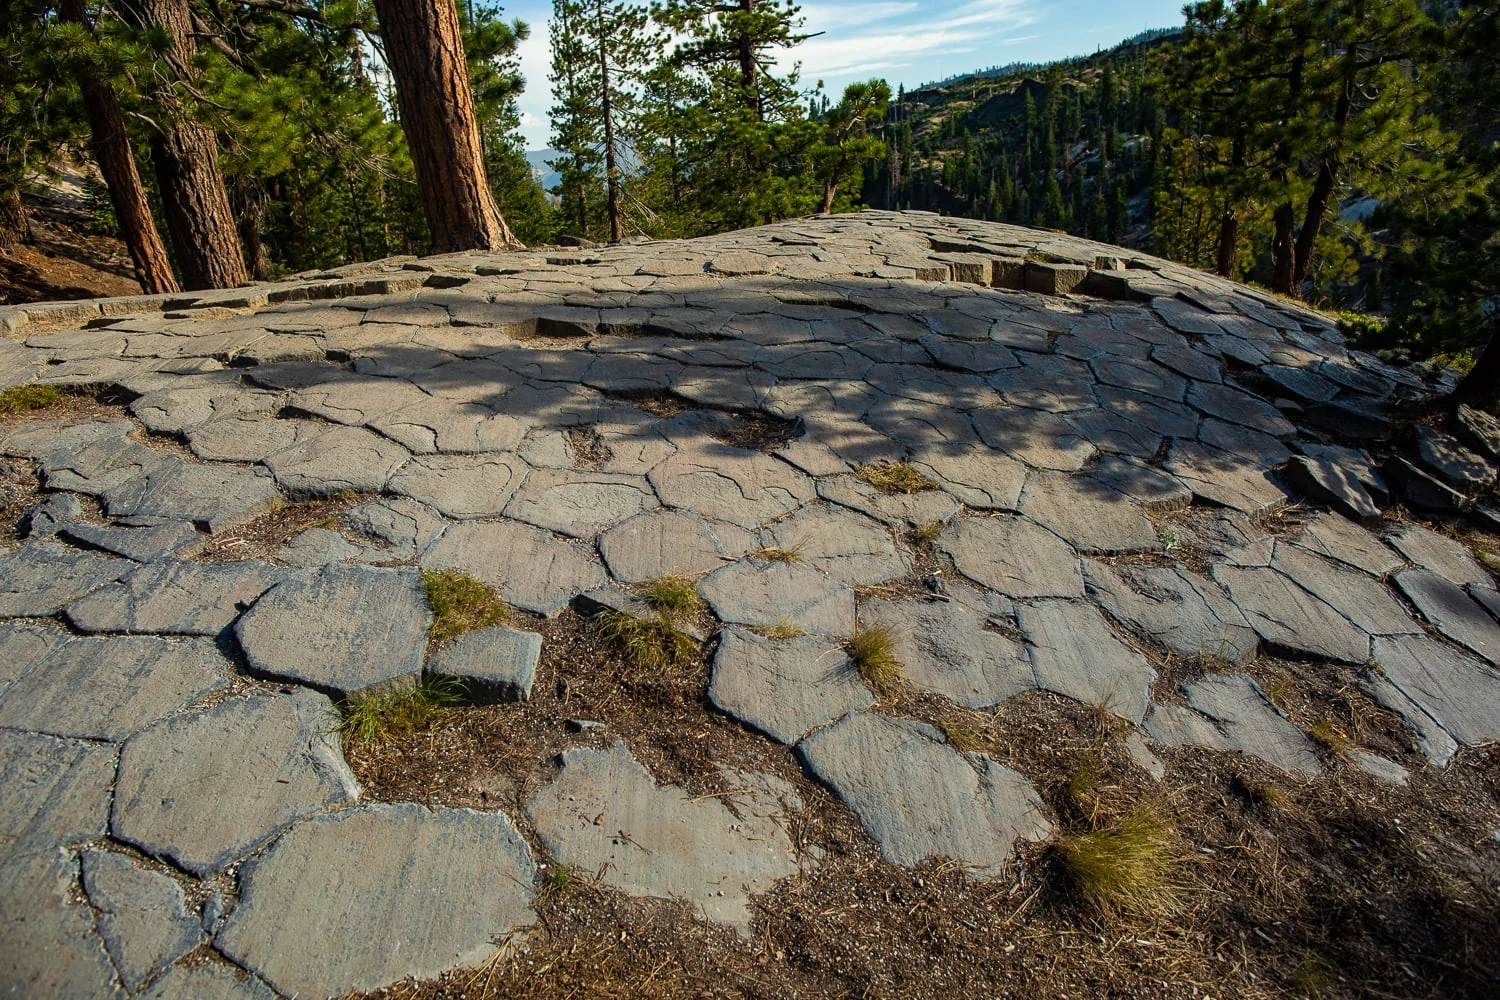 A natural hexagonal tile floor in the woods at Devil's postpile.